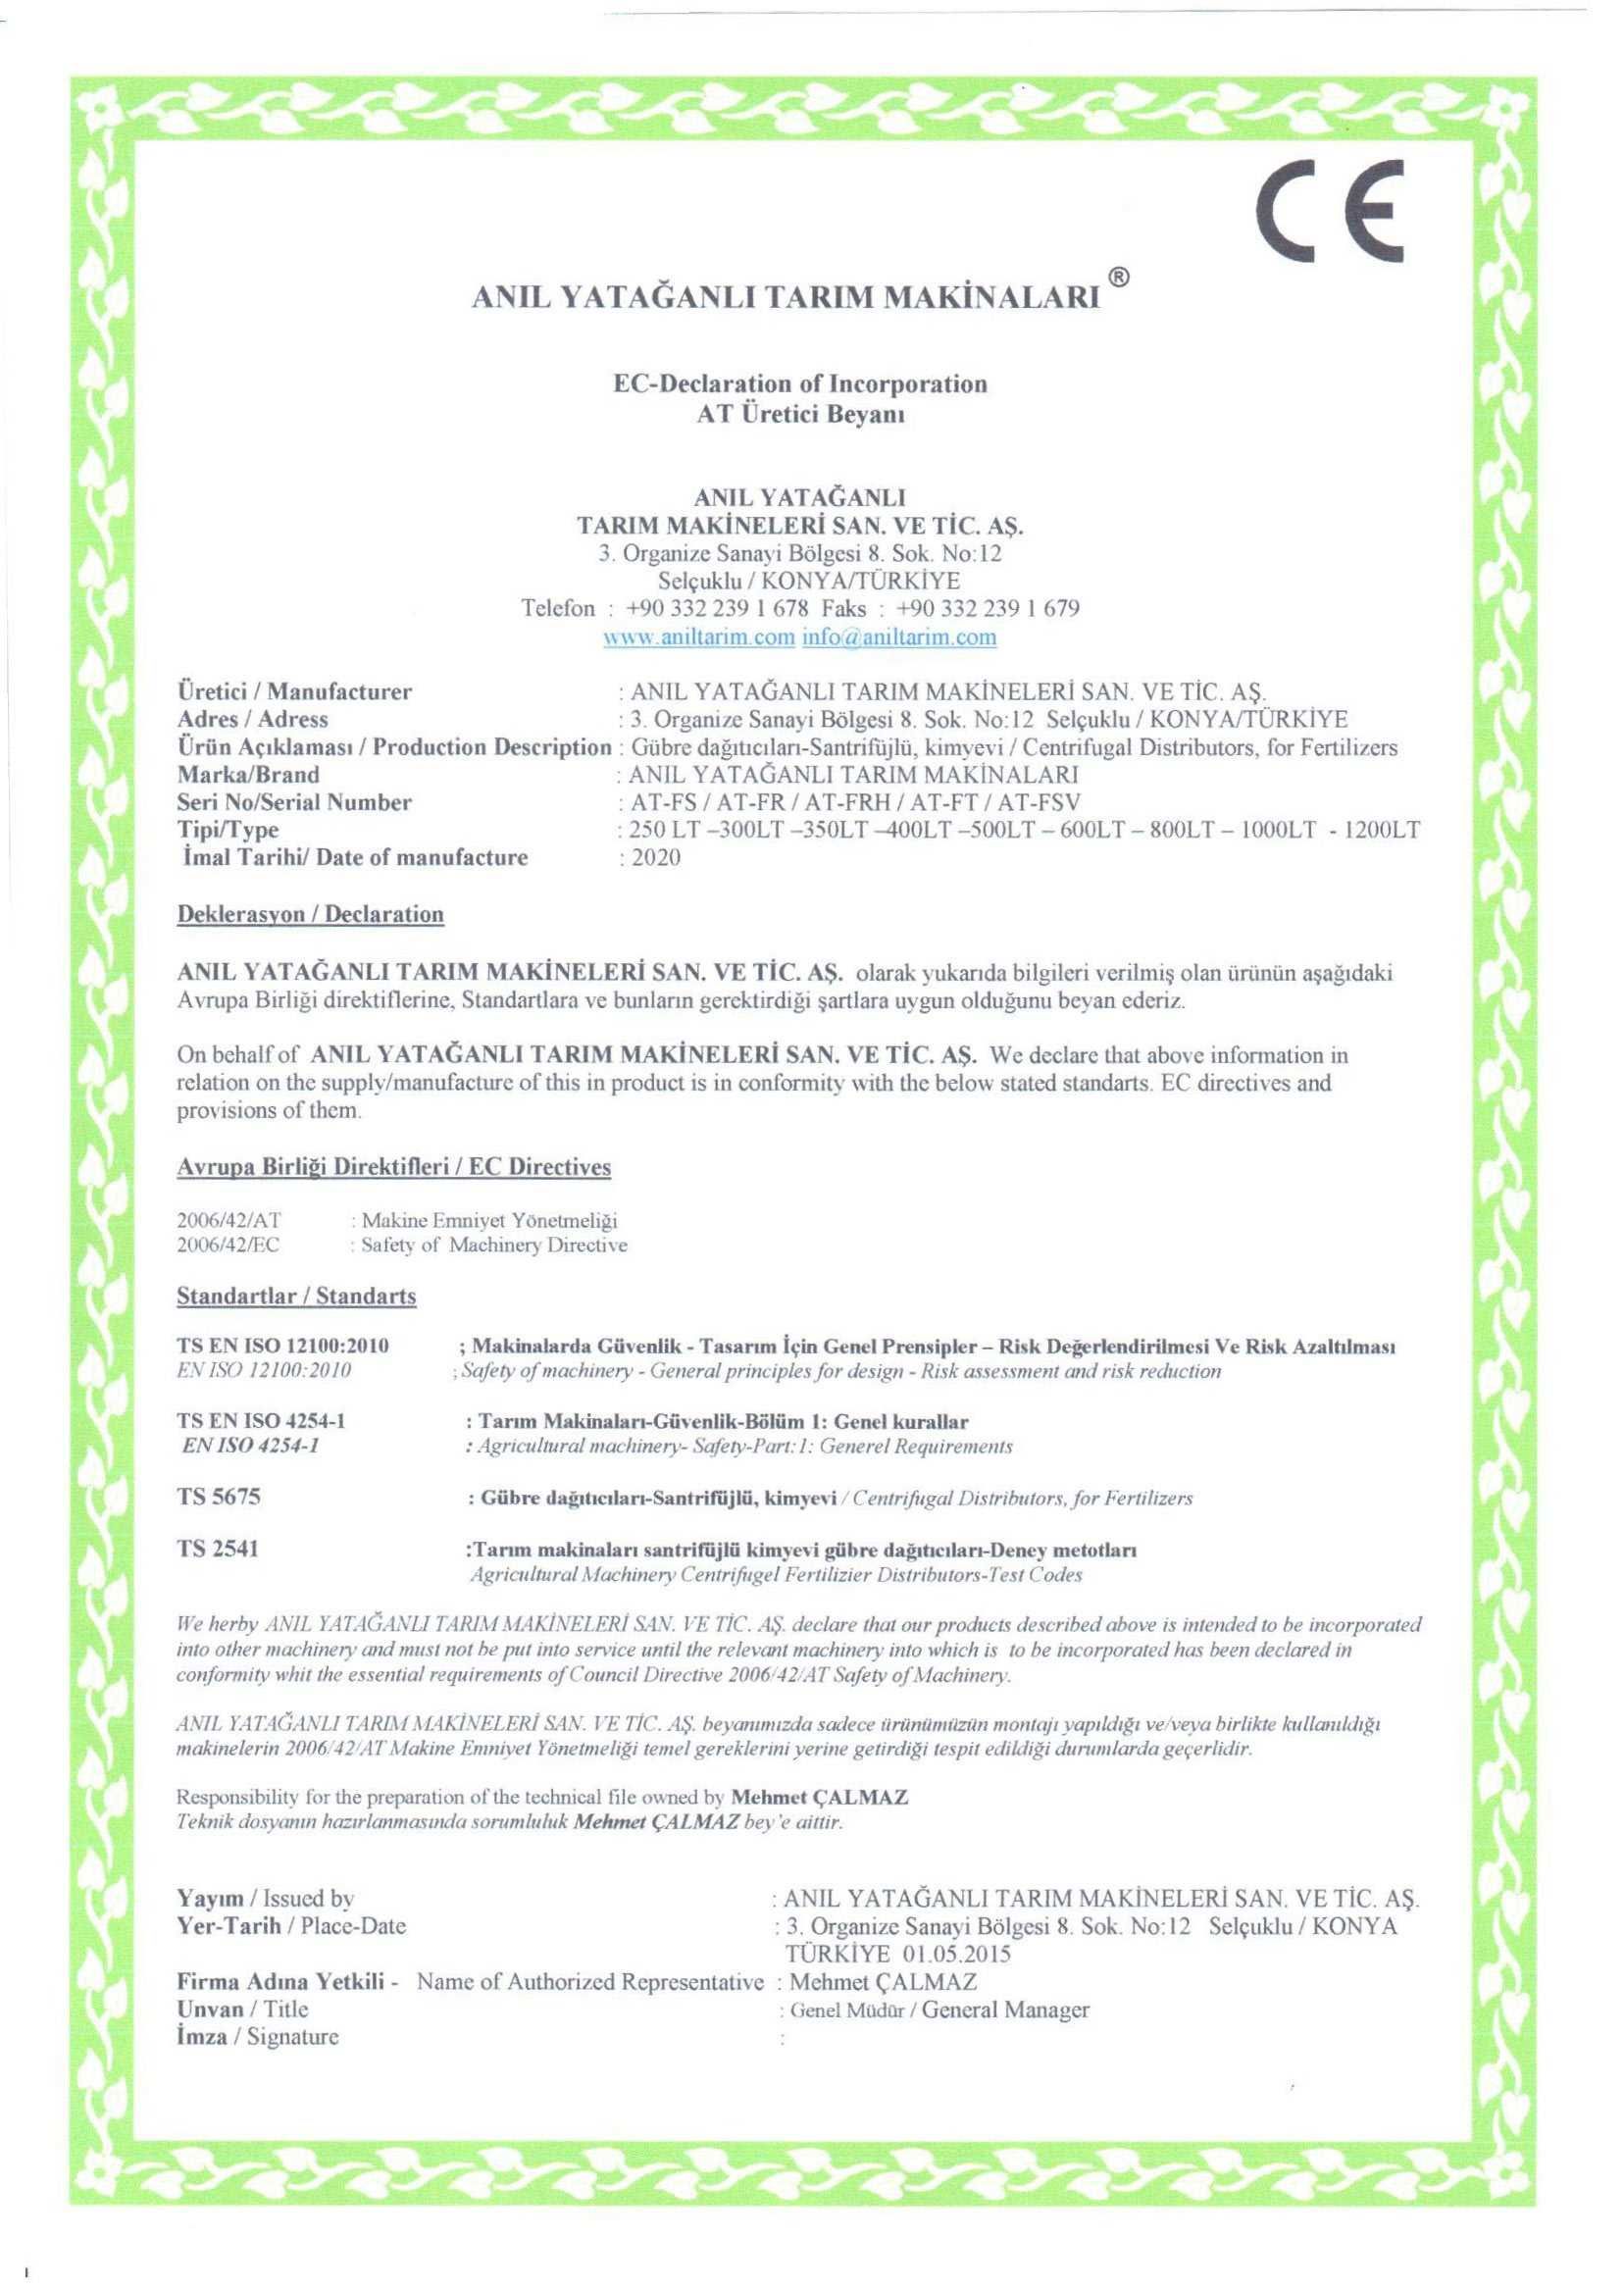 Anıl Yatağanlı Agricultural Machinery Inc.-certificate